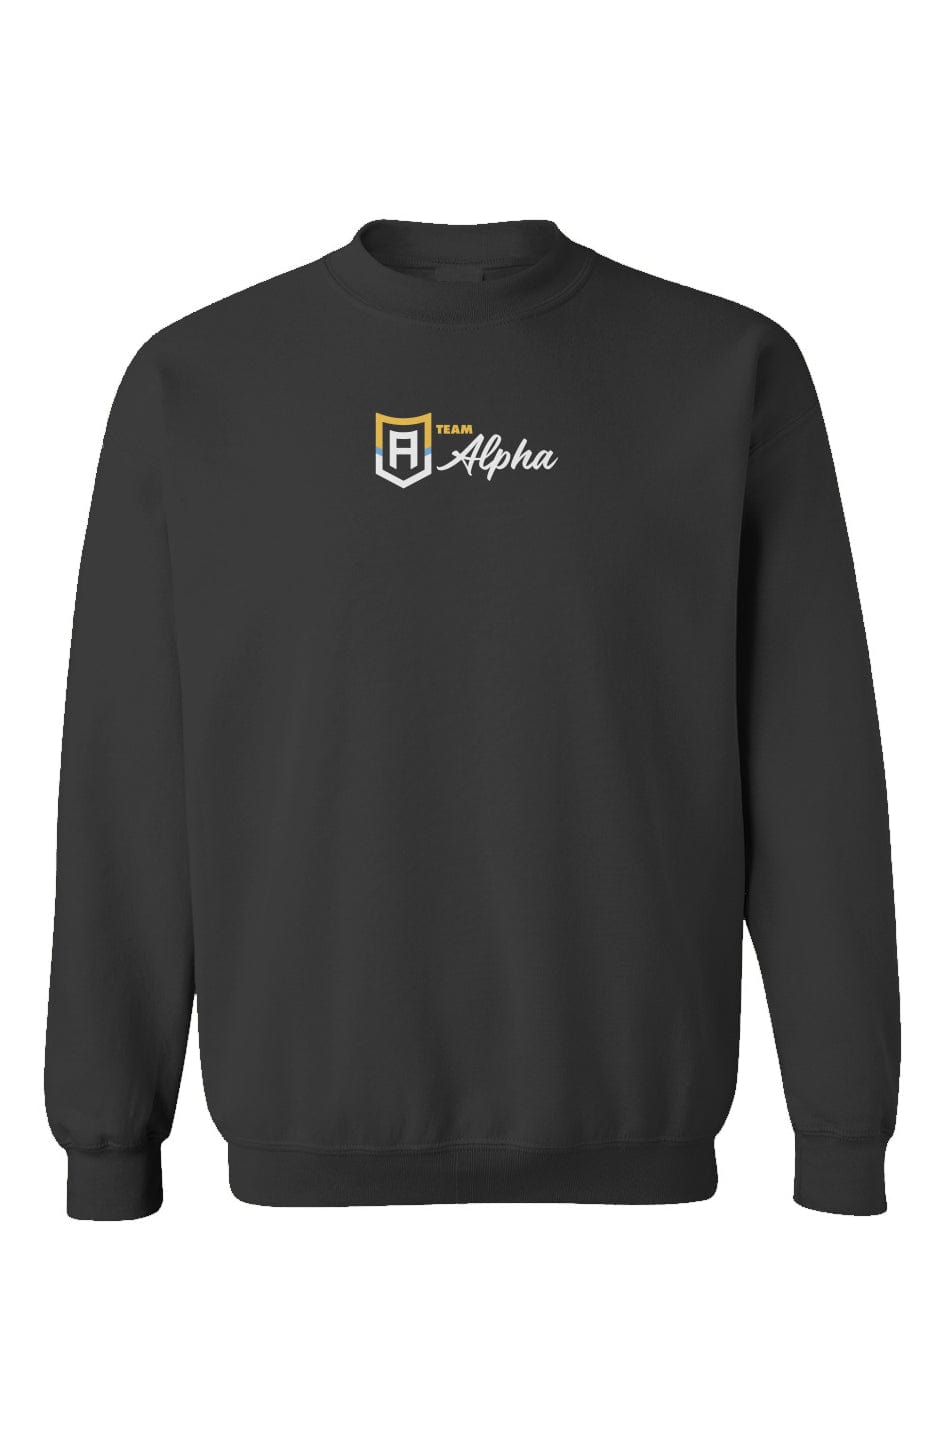 Alpha Lacrosse Premium Youth Sweatshirt Signature Lacrosse